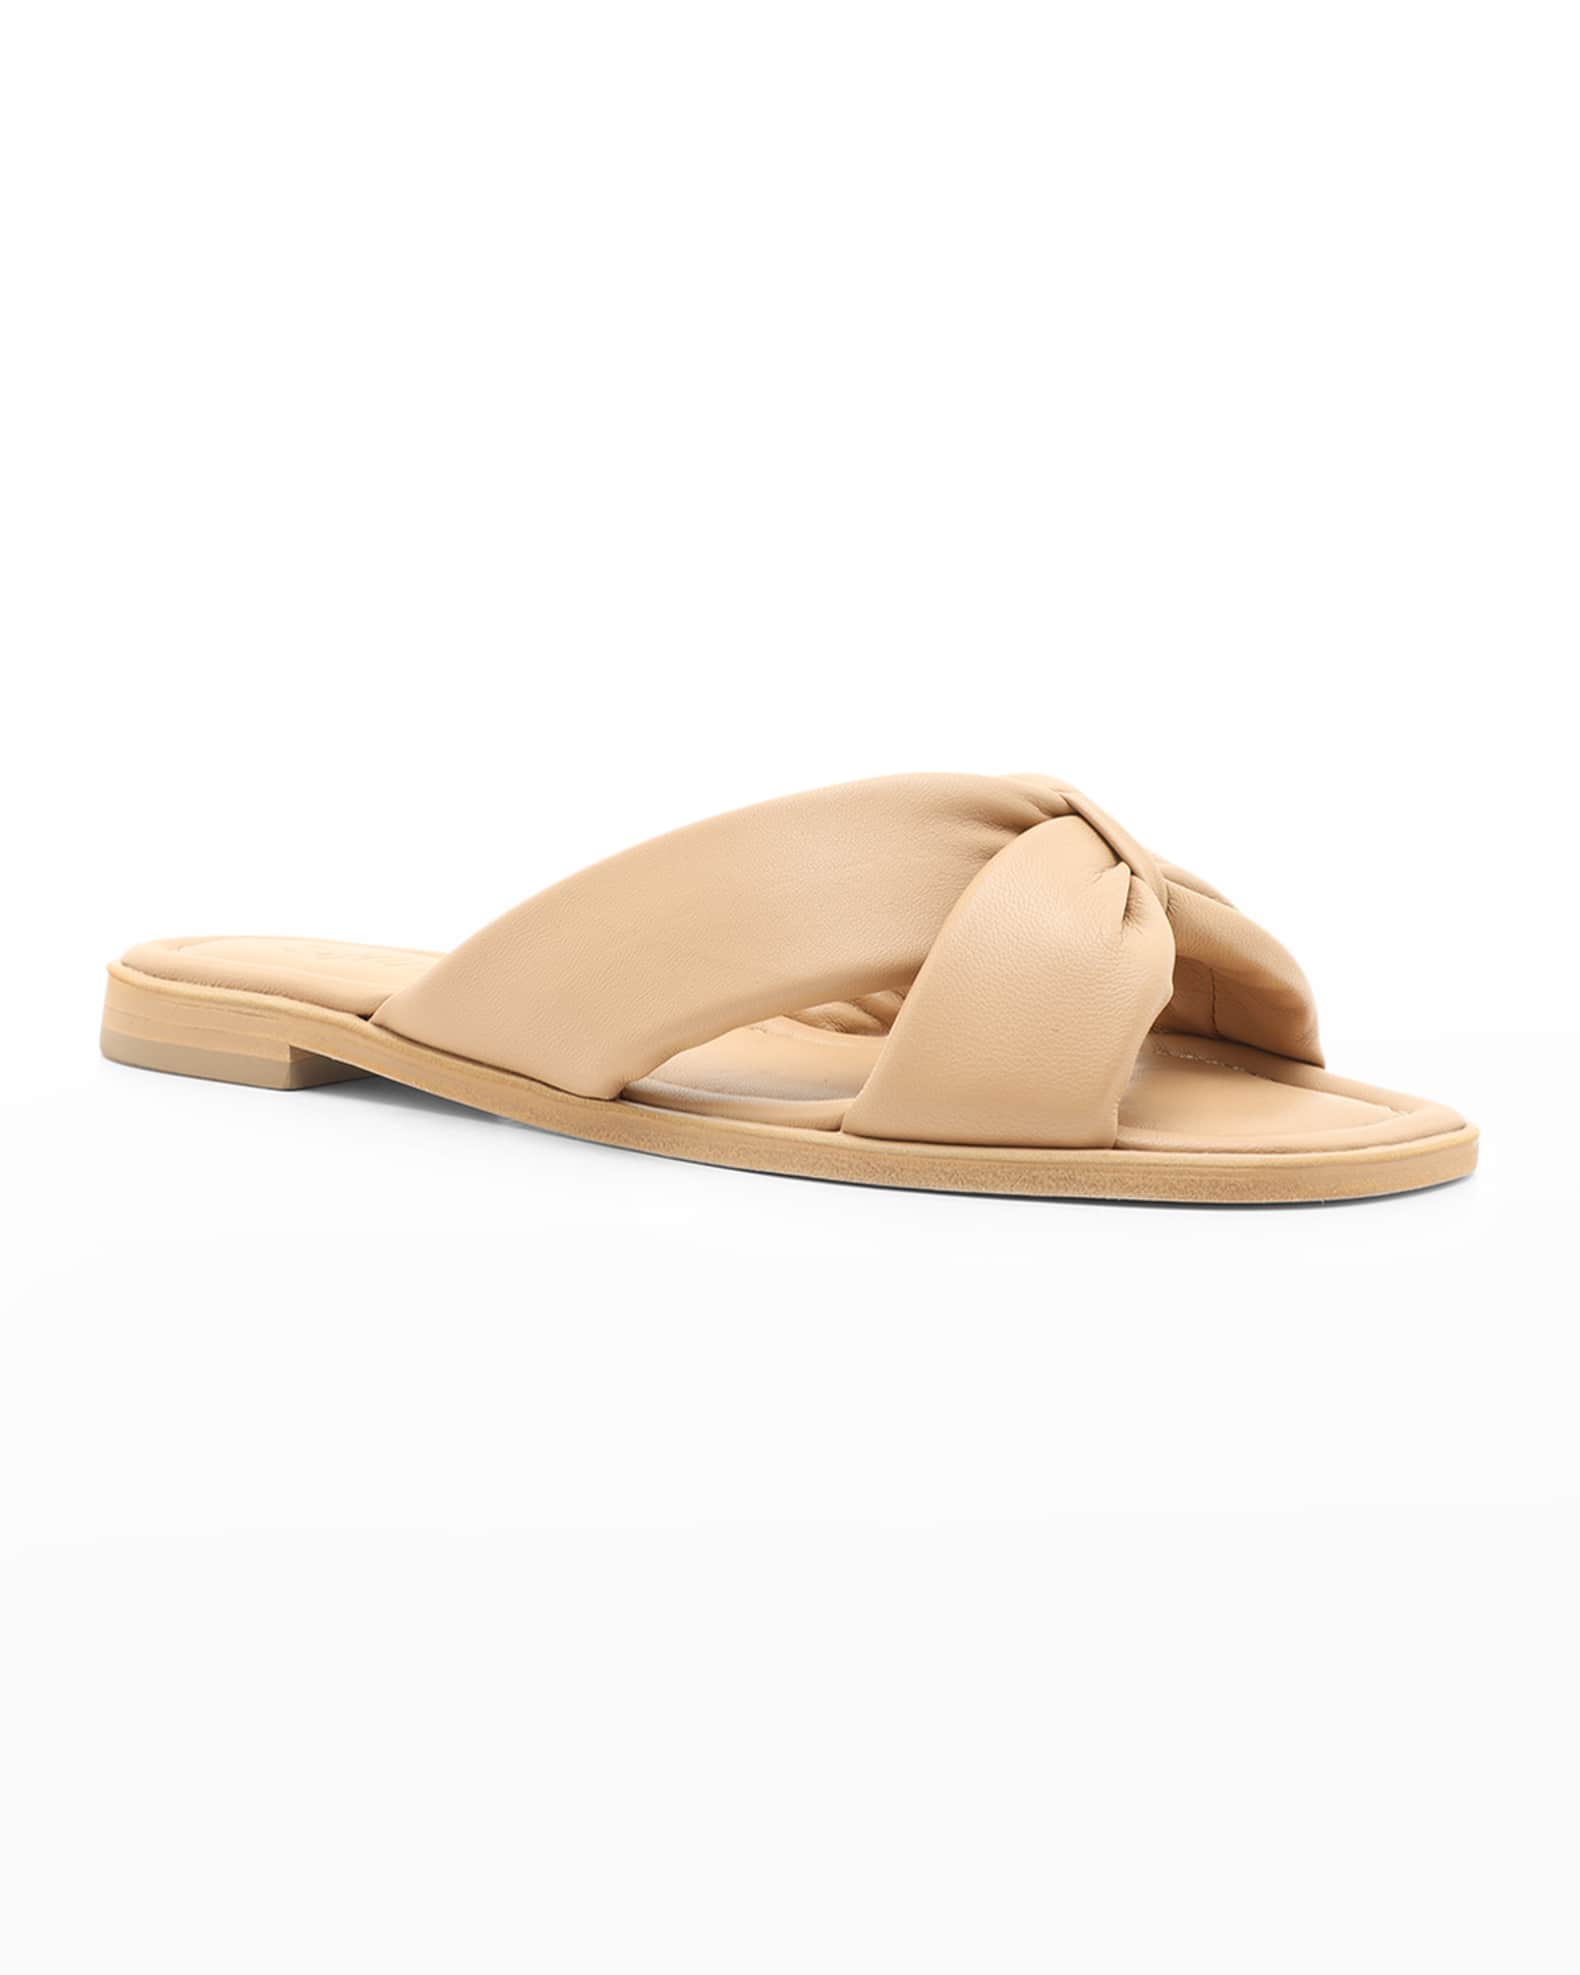 Schutz Fairy Crisscross Beach Sandals | Neiman Marcus